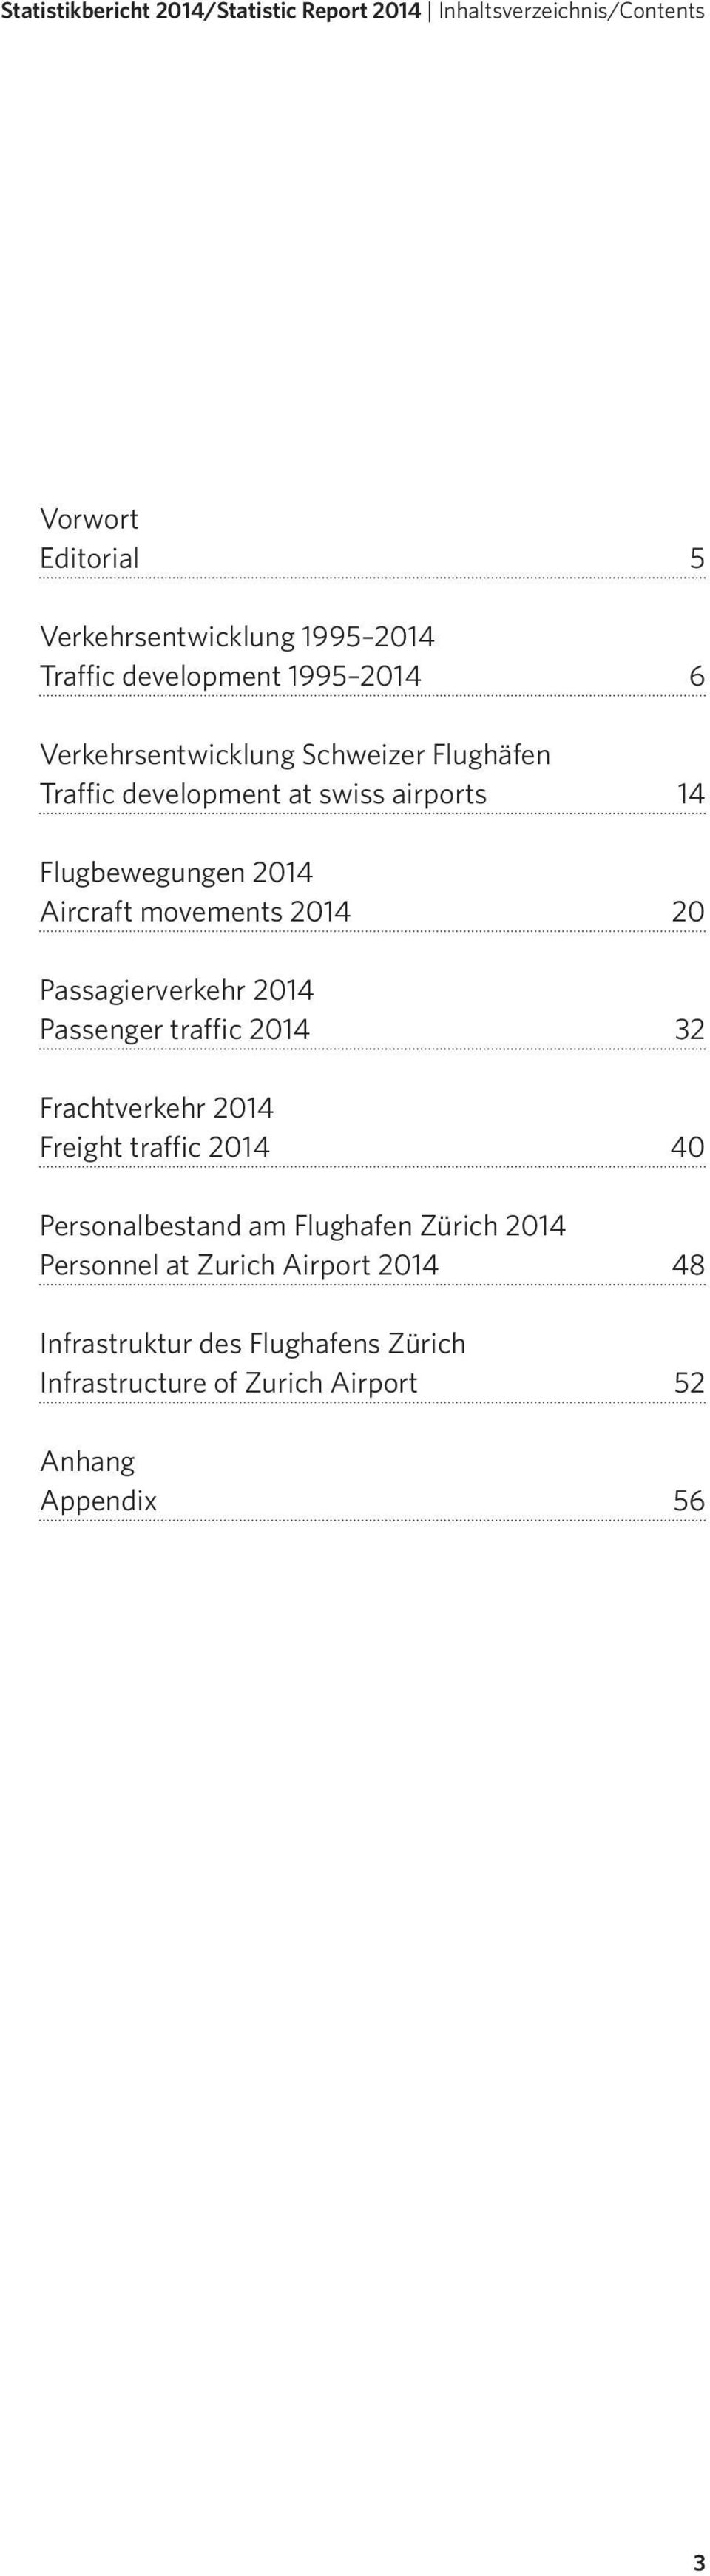 movements 2014 20 Passagierverkehr 2014 Passenger traffic 2014 32 Frachtverkehr 2014 Freight traffic 2014 40 Personalbestand am